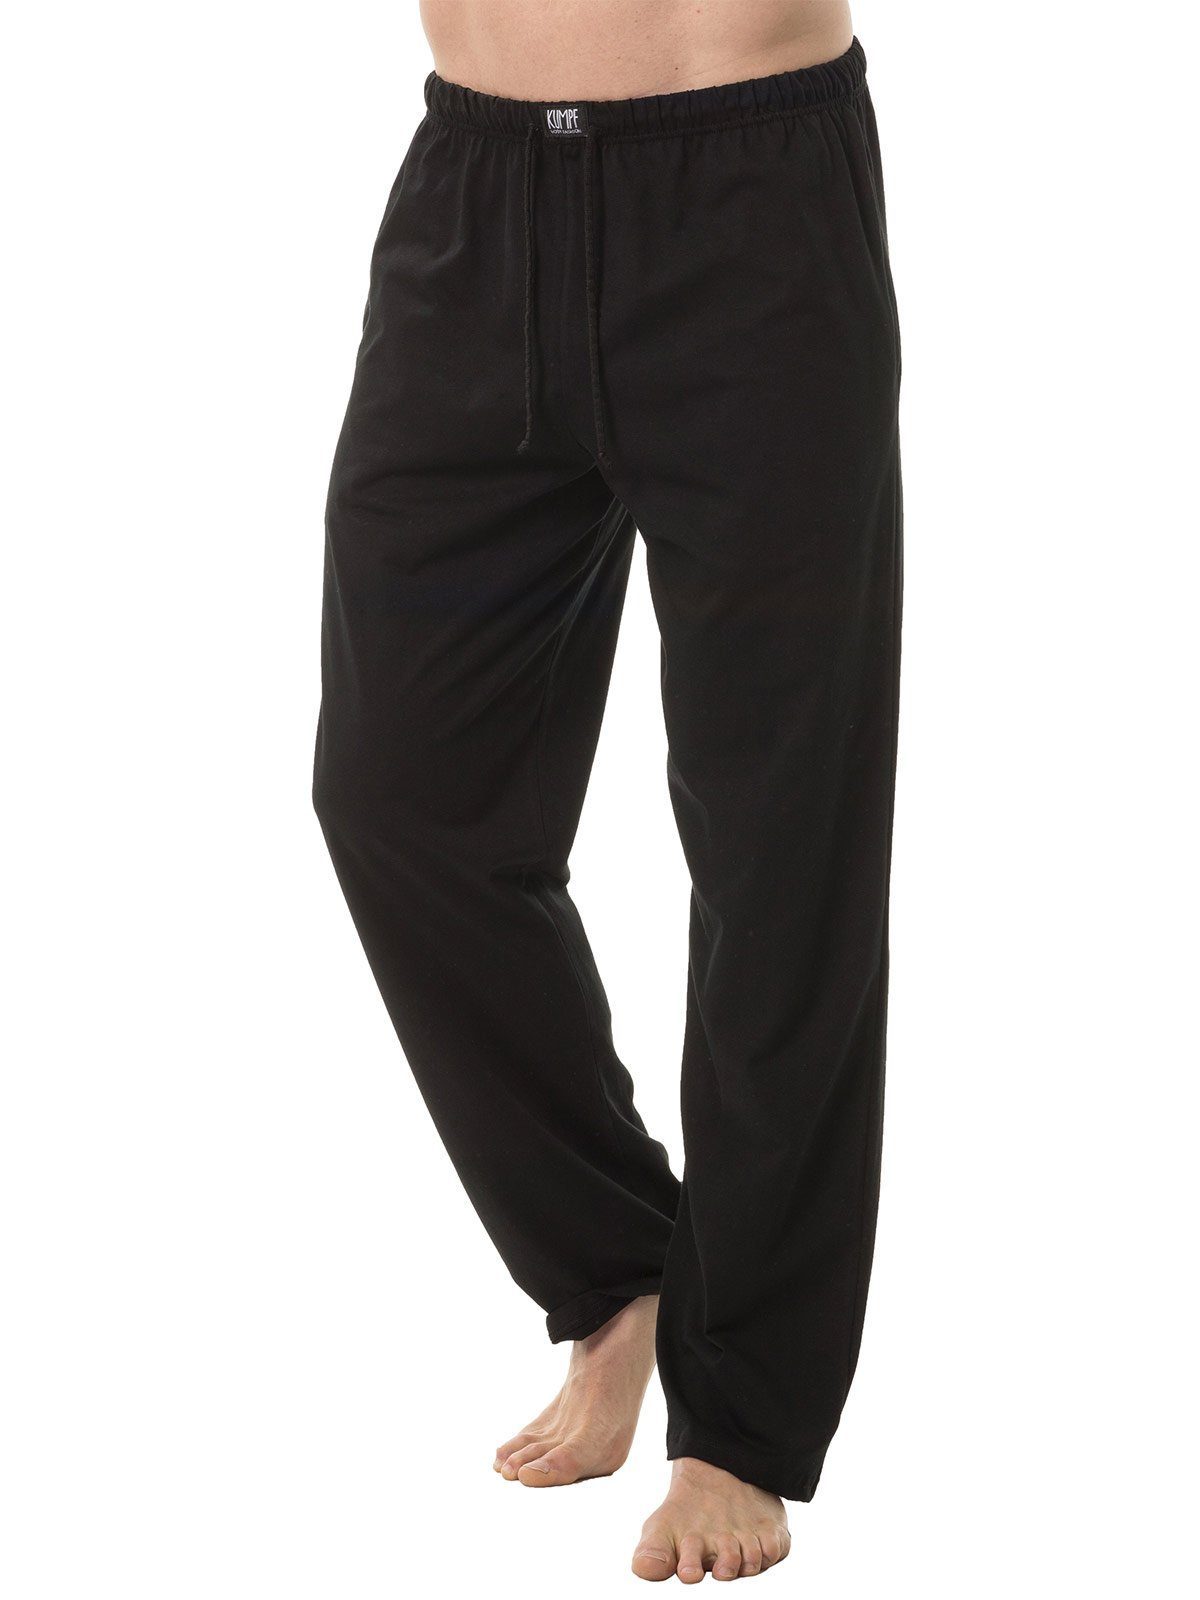 1-tlg) Cotton hohe Loungehose Bio Herren schwarz KUMPF (Stück, Markenqualität Pyjamahose